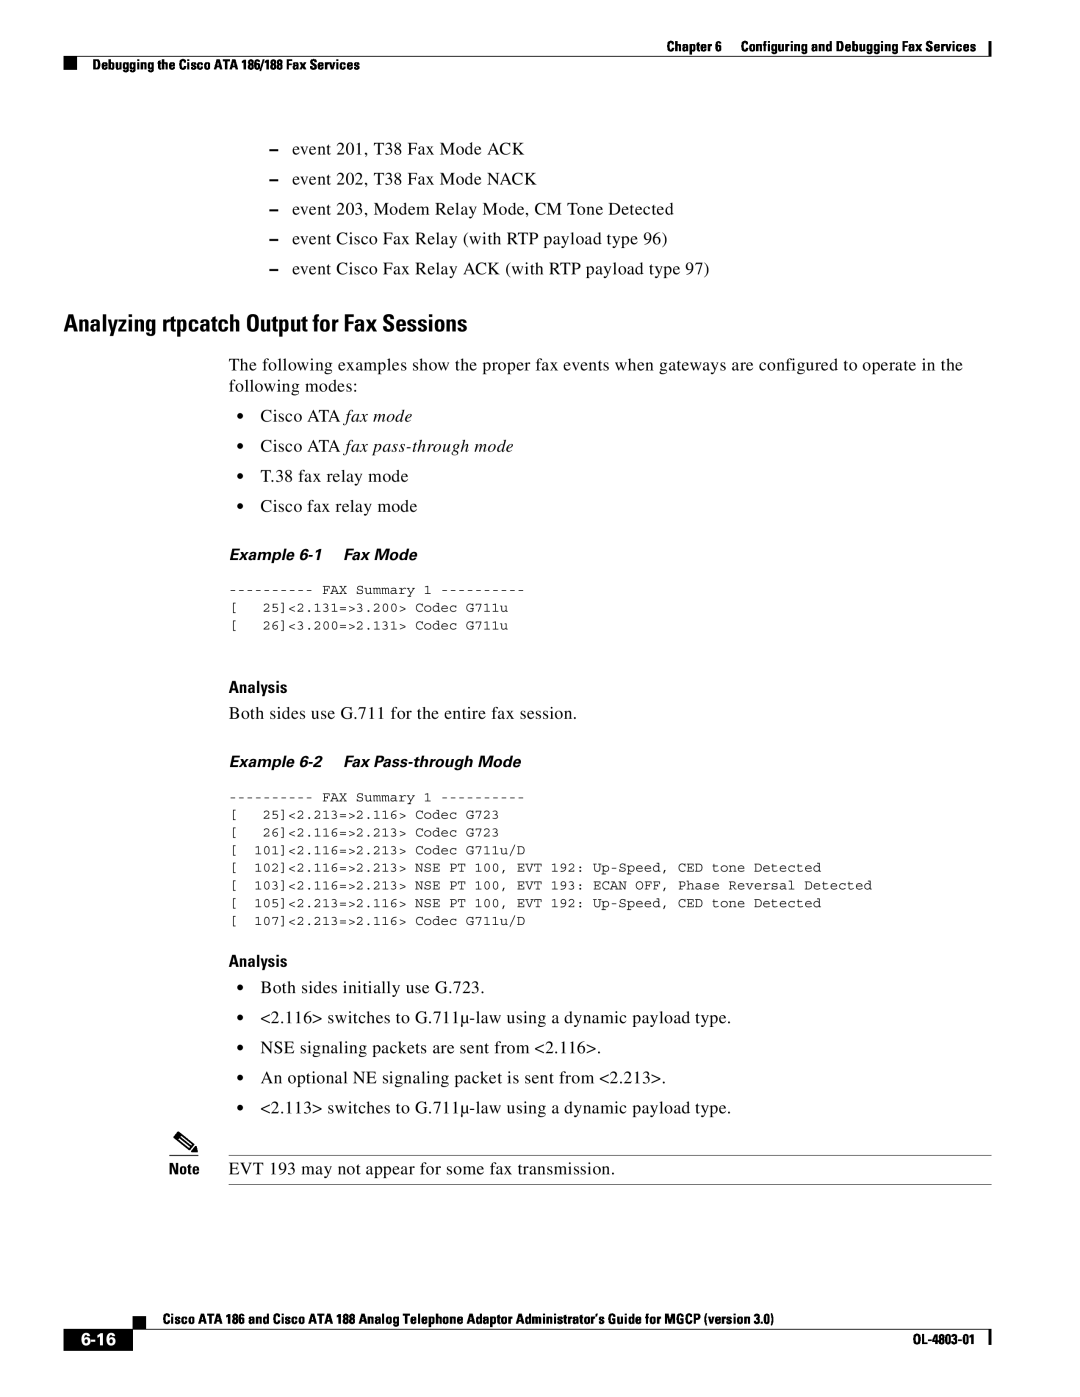 Cisco Systems ATA 186 manual Analyzing rtpcatch Output for Fax Sessions, Cisco ATA fax pass-through mode, Analysis, 6-16 